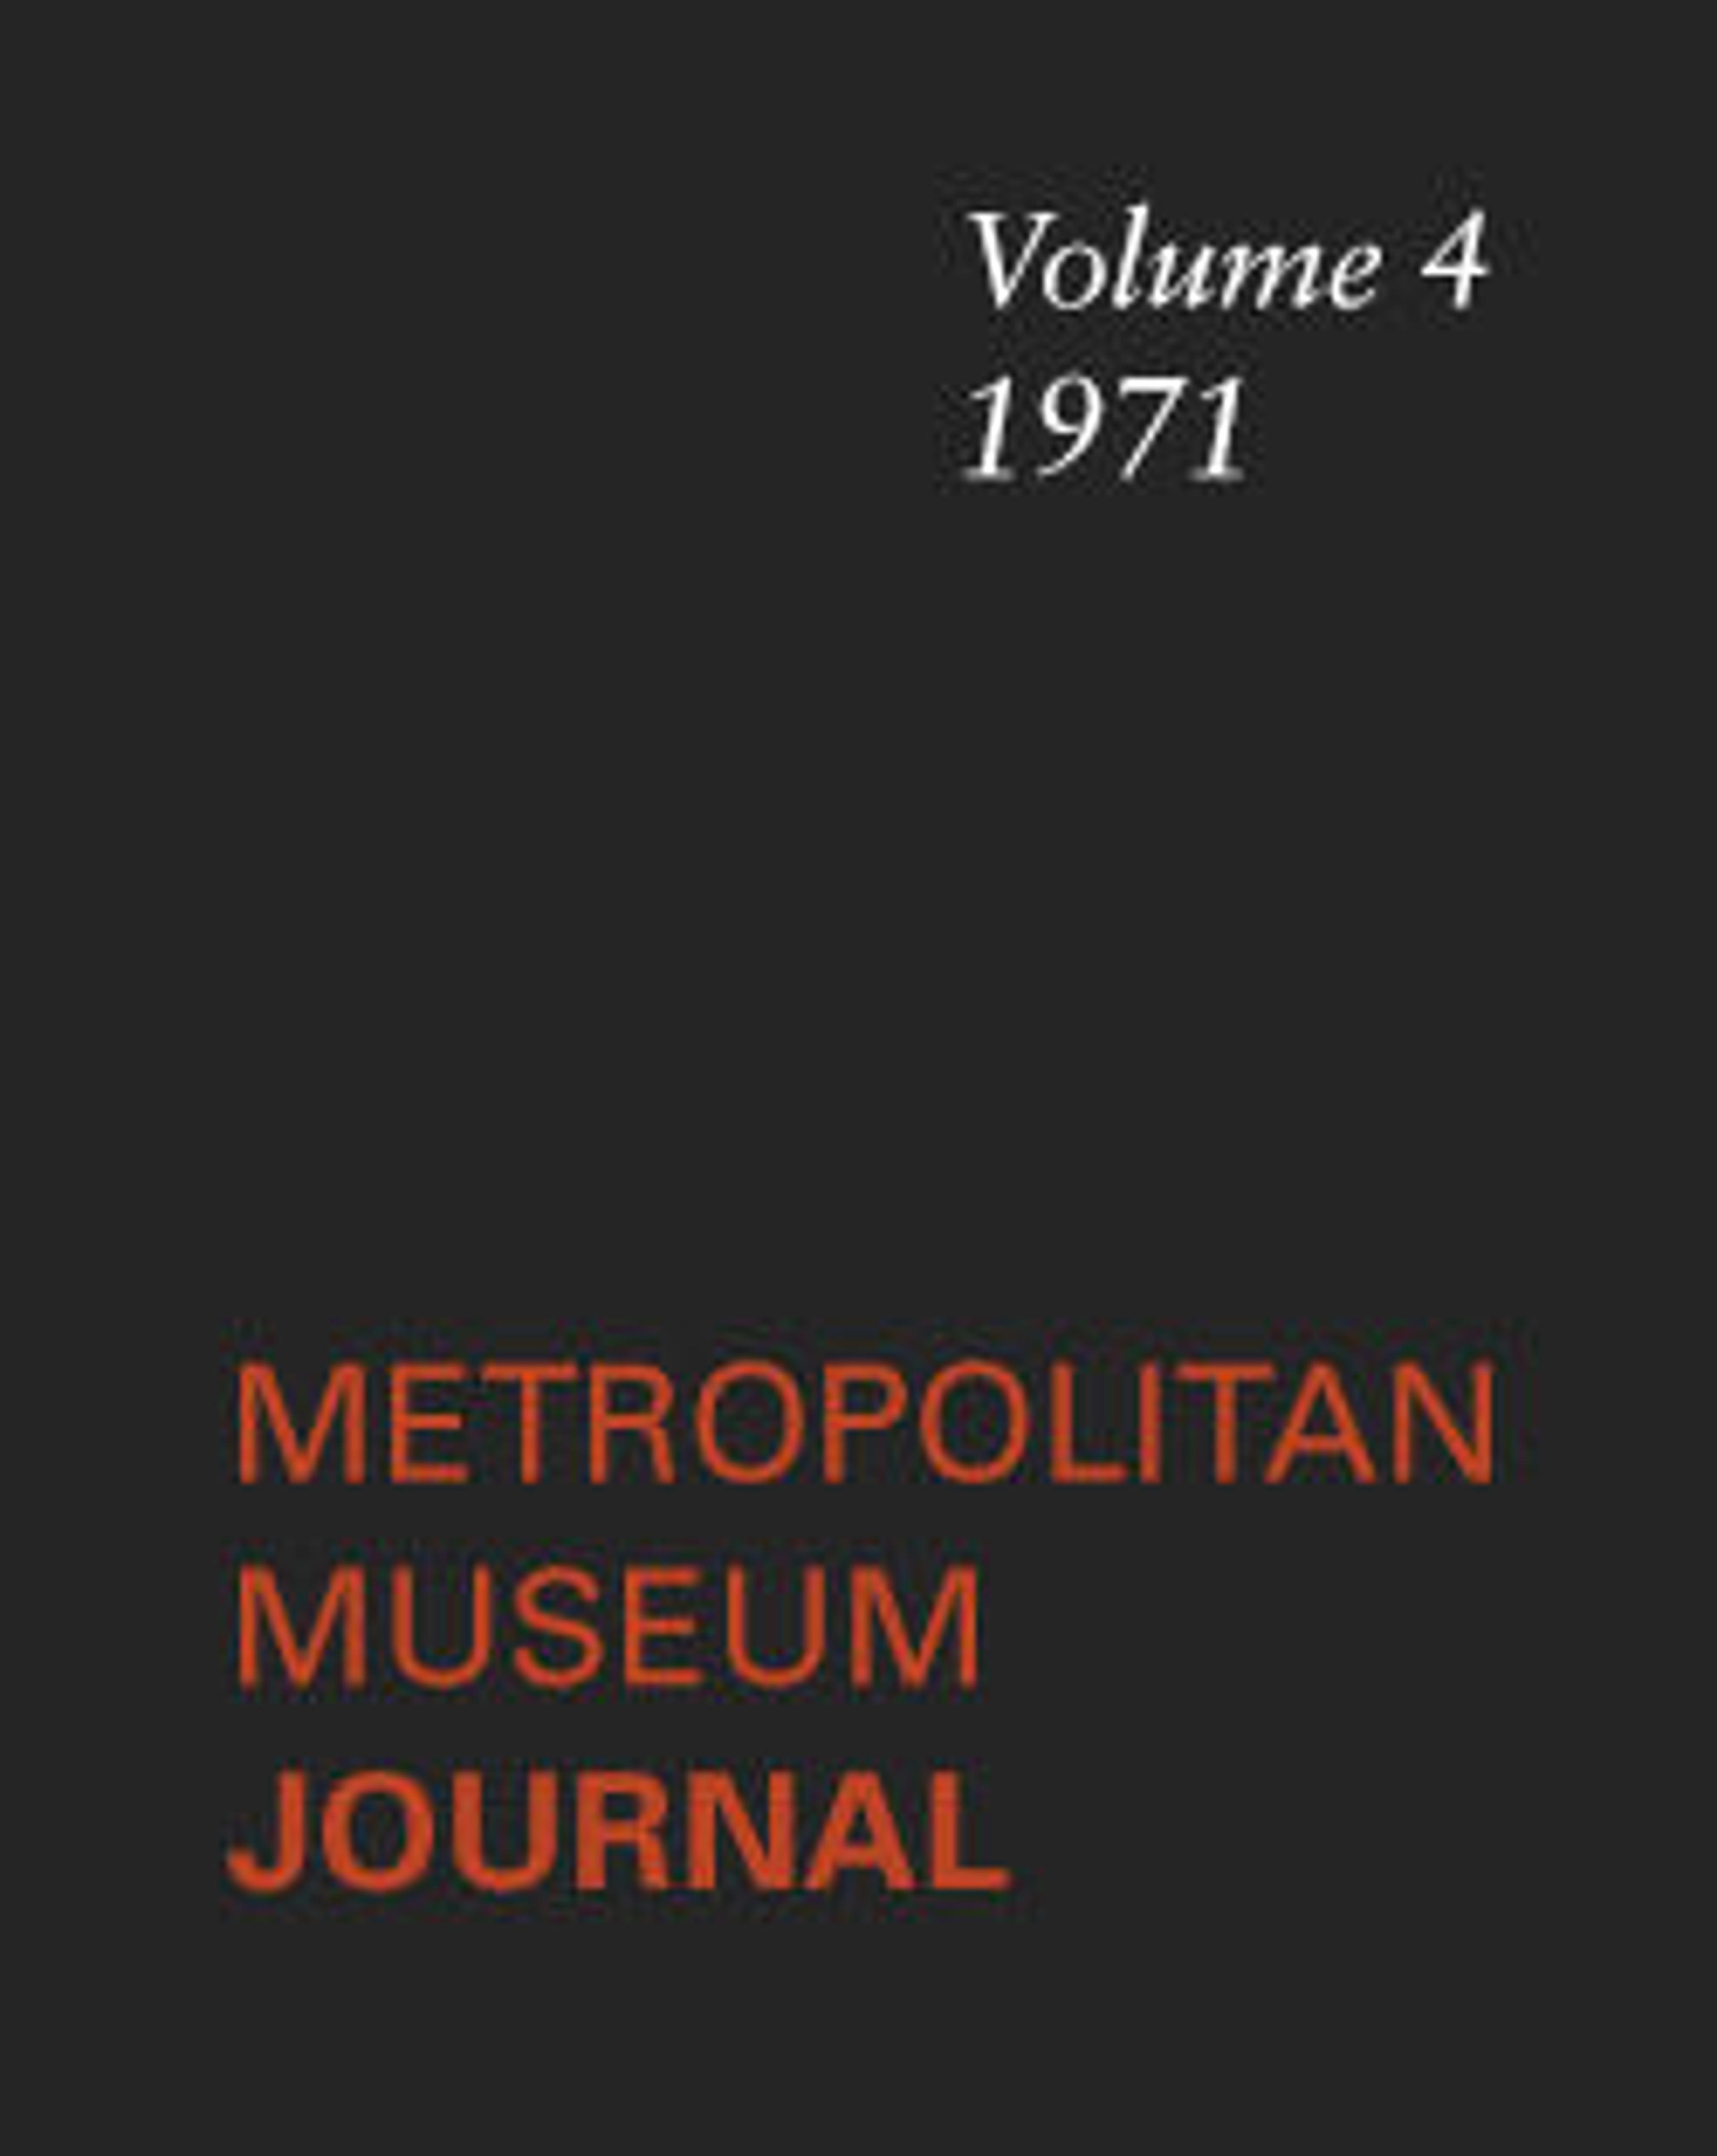 The Metropolitan Museum Journal, v. 4 (1971)